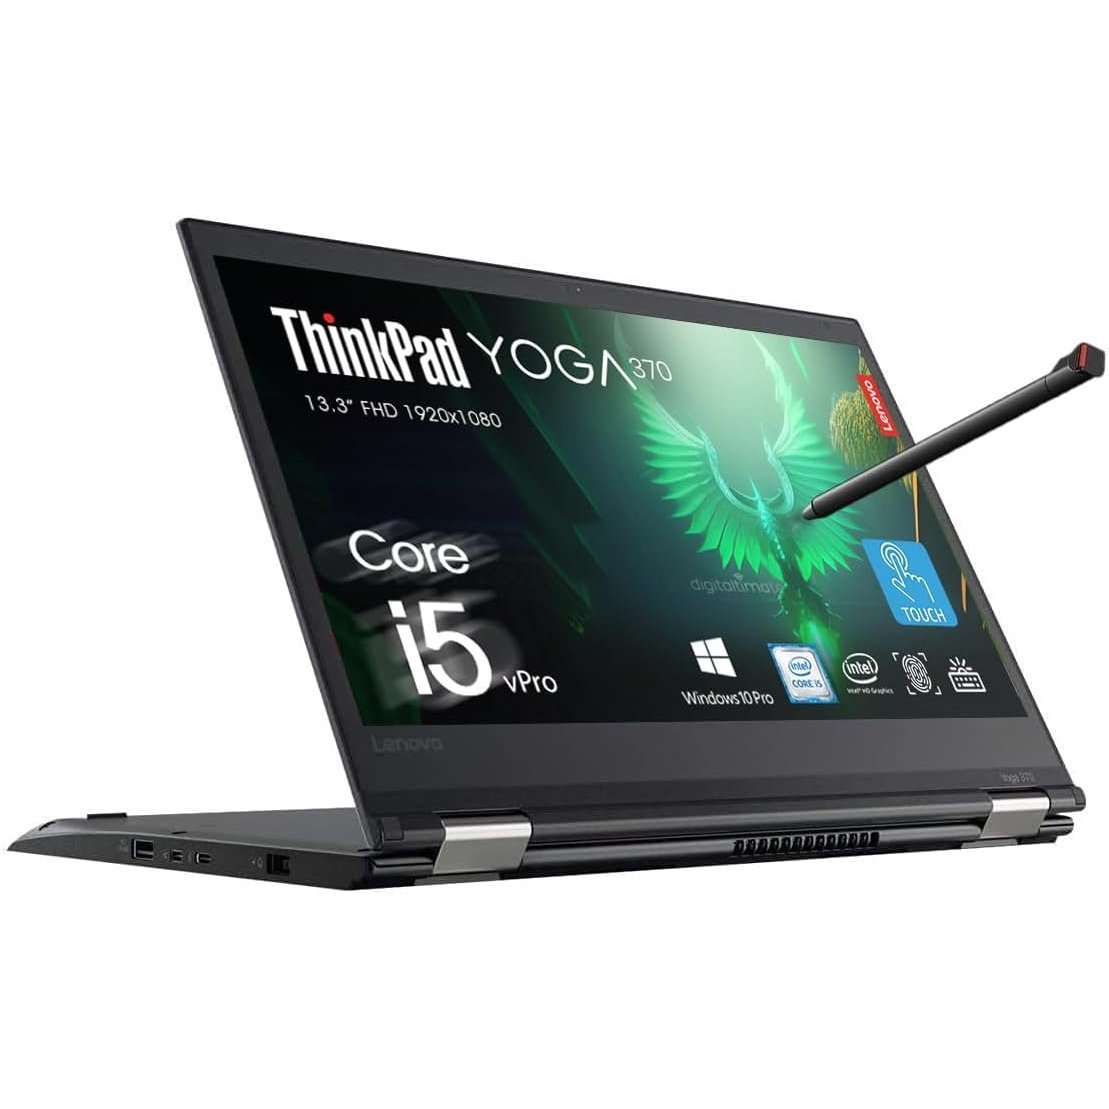 Lenovo ThinkPad Yoga 370 2in1 Touch w/Pen, Intel Core i5-7300U, 13.3" FHD, 16GB RAM 512GB SSD, Backlit KB, FP Reader, Thunderbolt 3, MicroSD Reader, Windows 10 Pro - Renewed (16GB RAM | 512GB SSD)